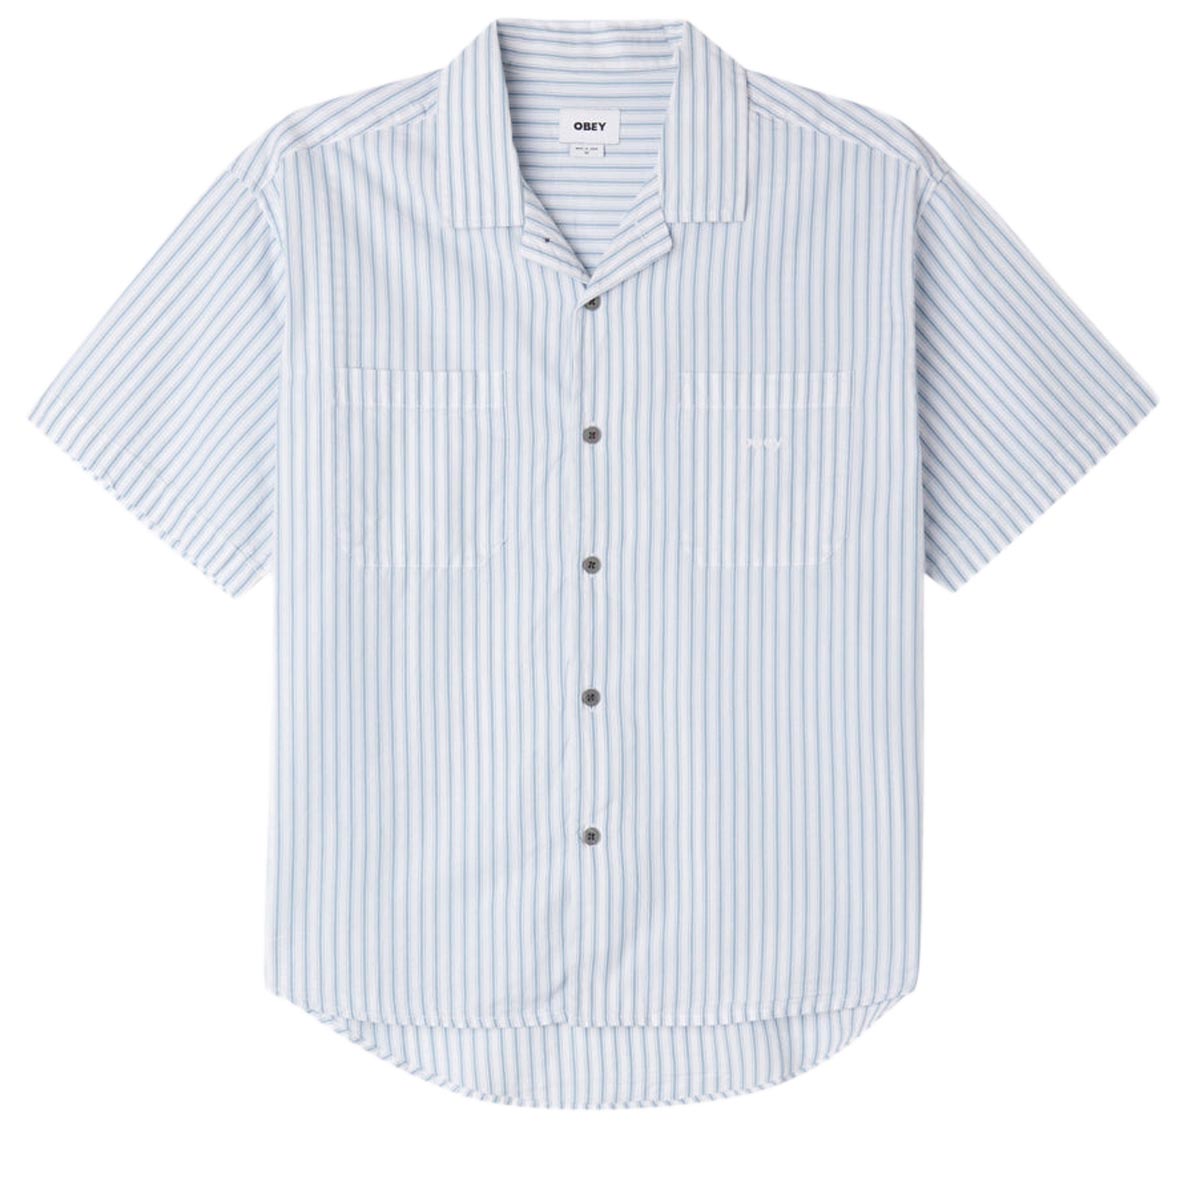 Obey Bigwig Stripe Woven Shirt - Good Grey Multi image 1